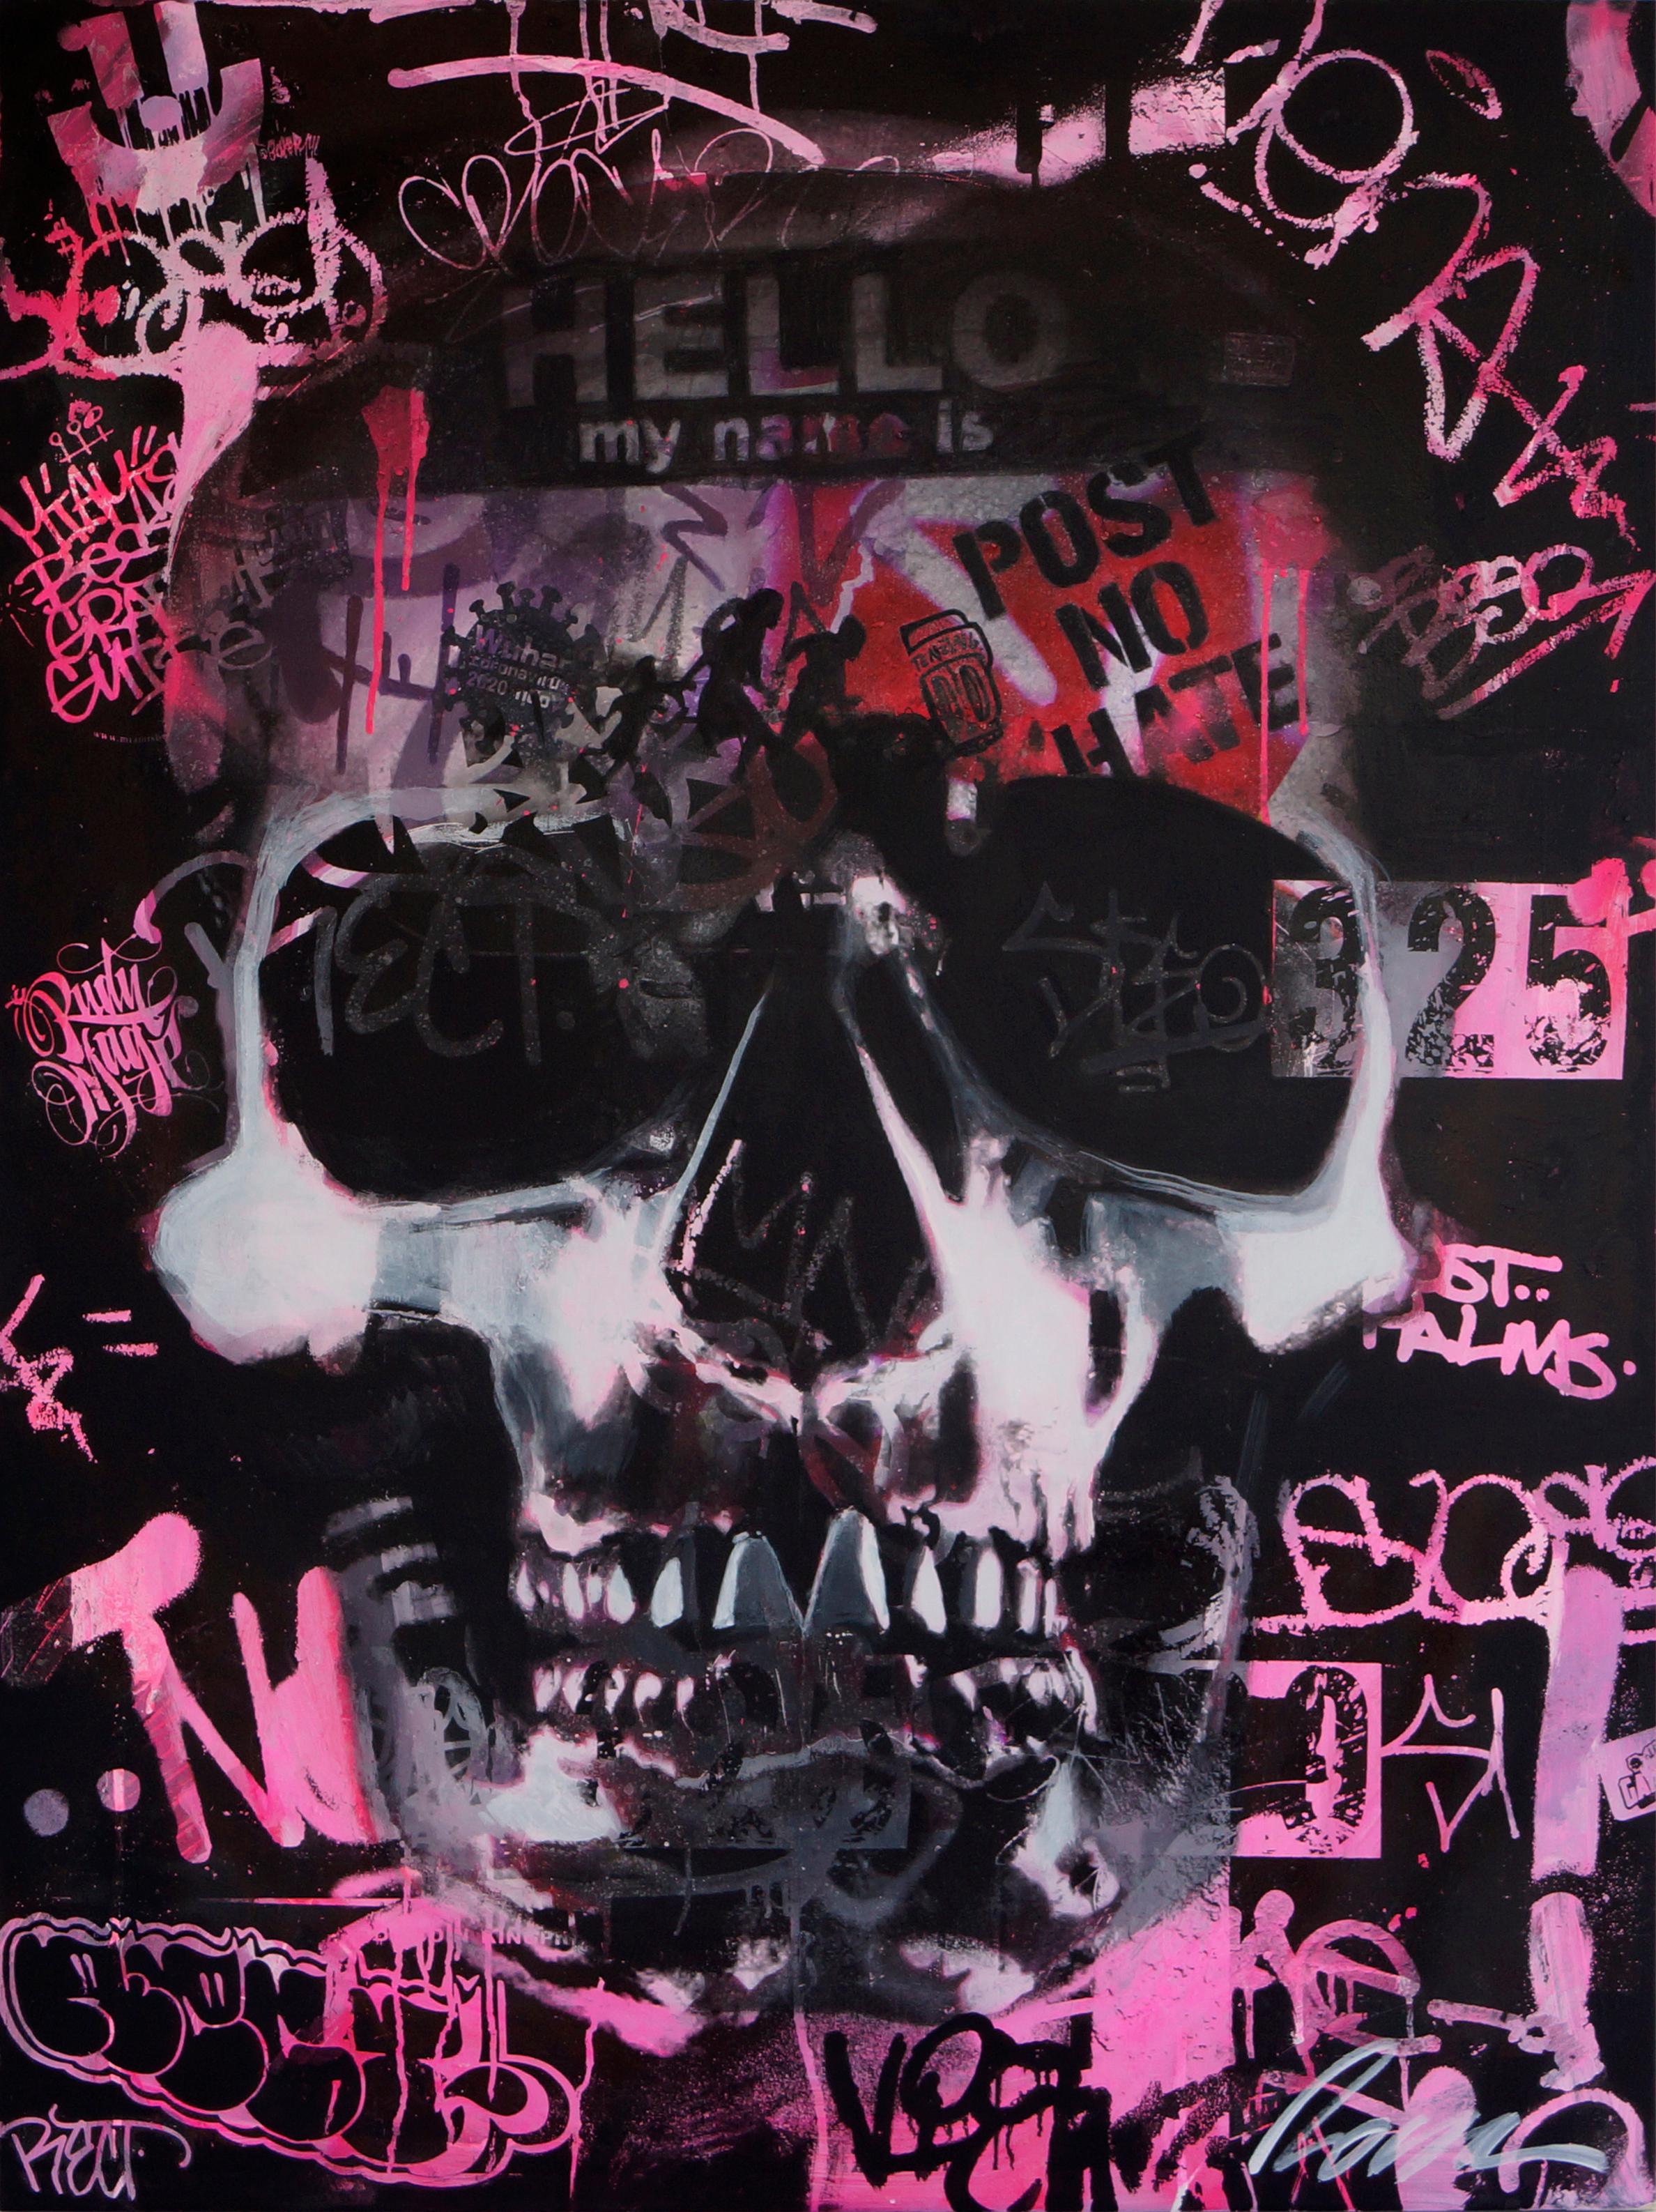 Post No Hate - Skull Street Art & Graffiti  - Mixed Media Art by Fabien Rocca